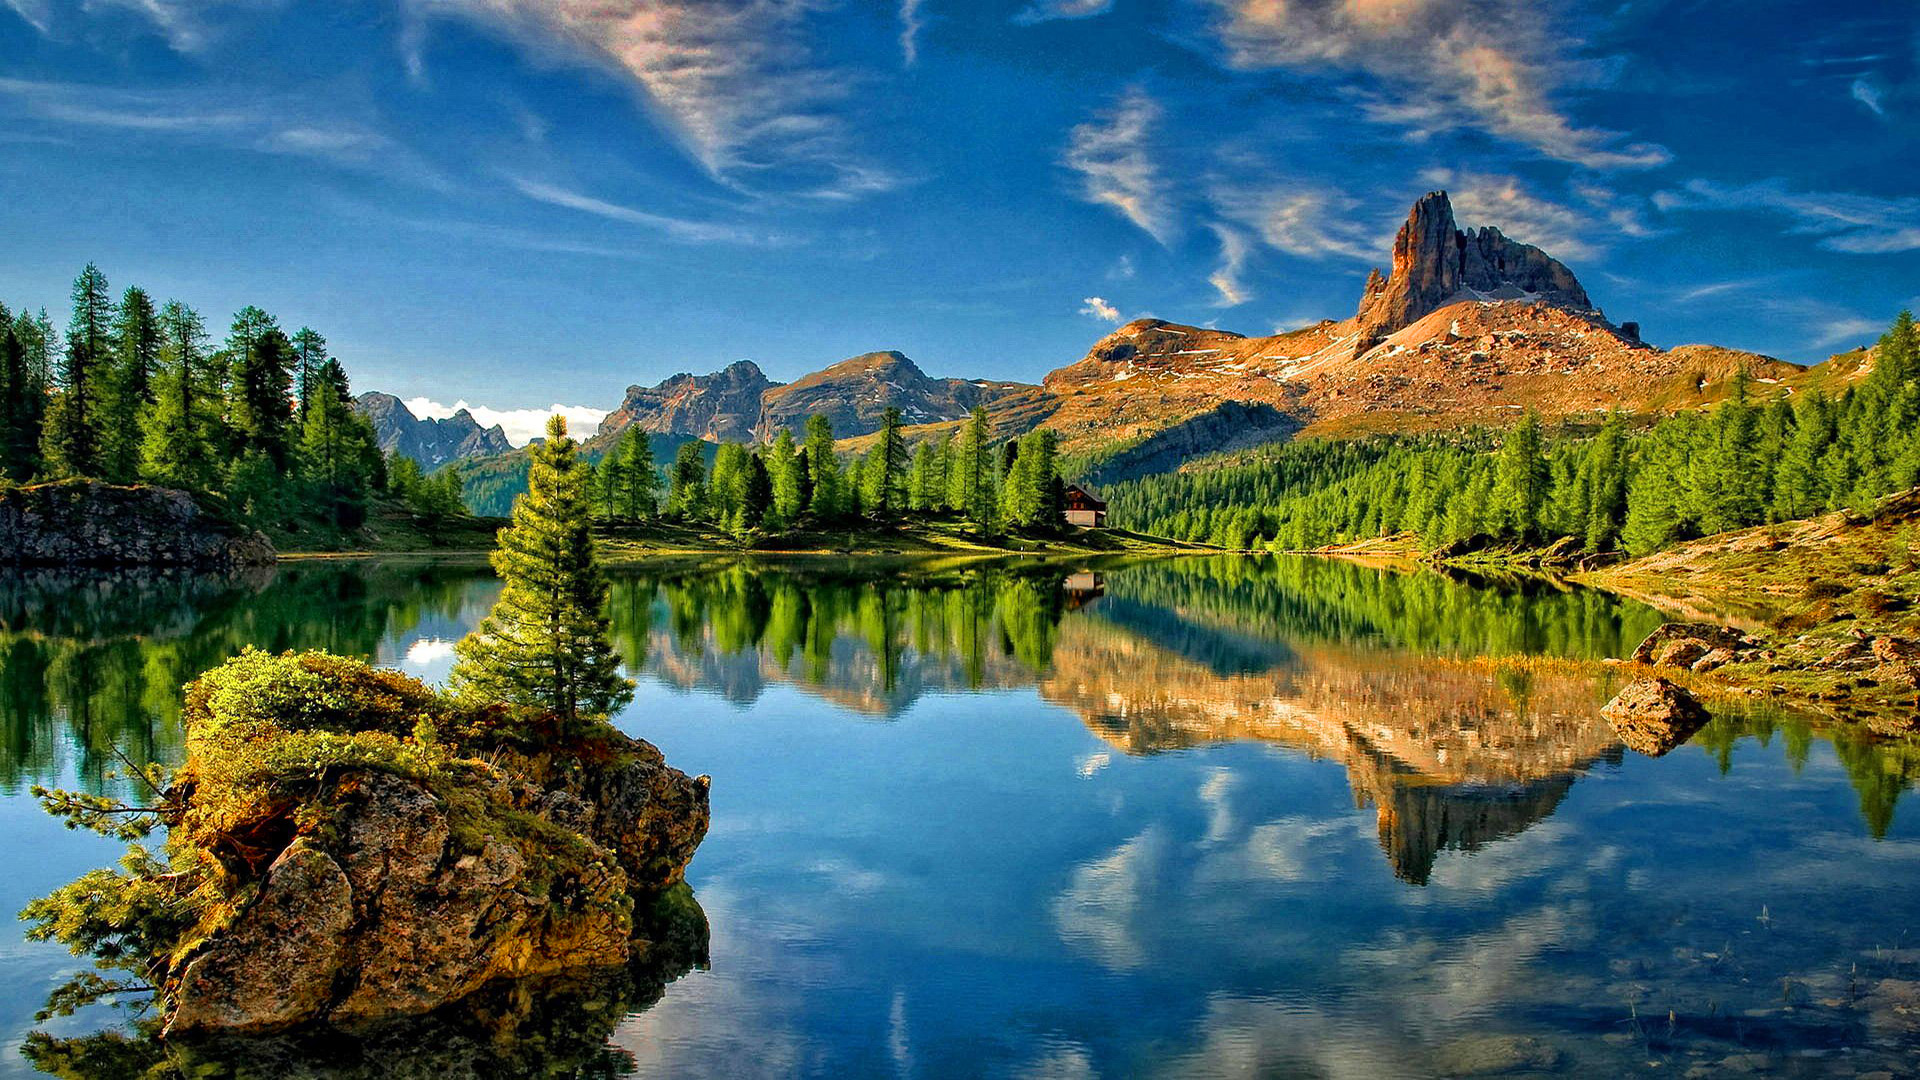 Lake mountain sky reflection desktop wallpapers high resolution x